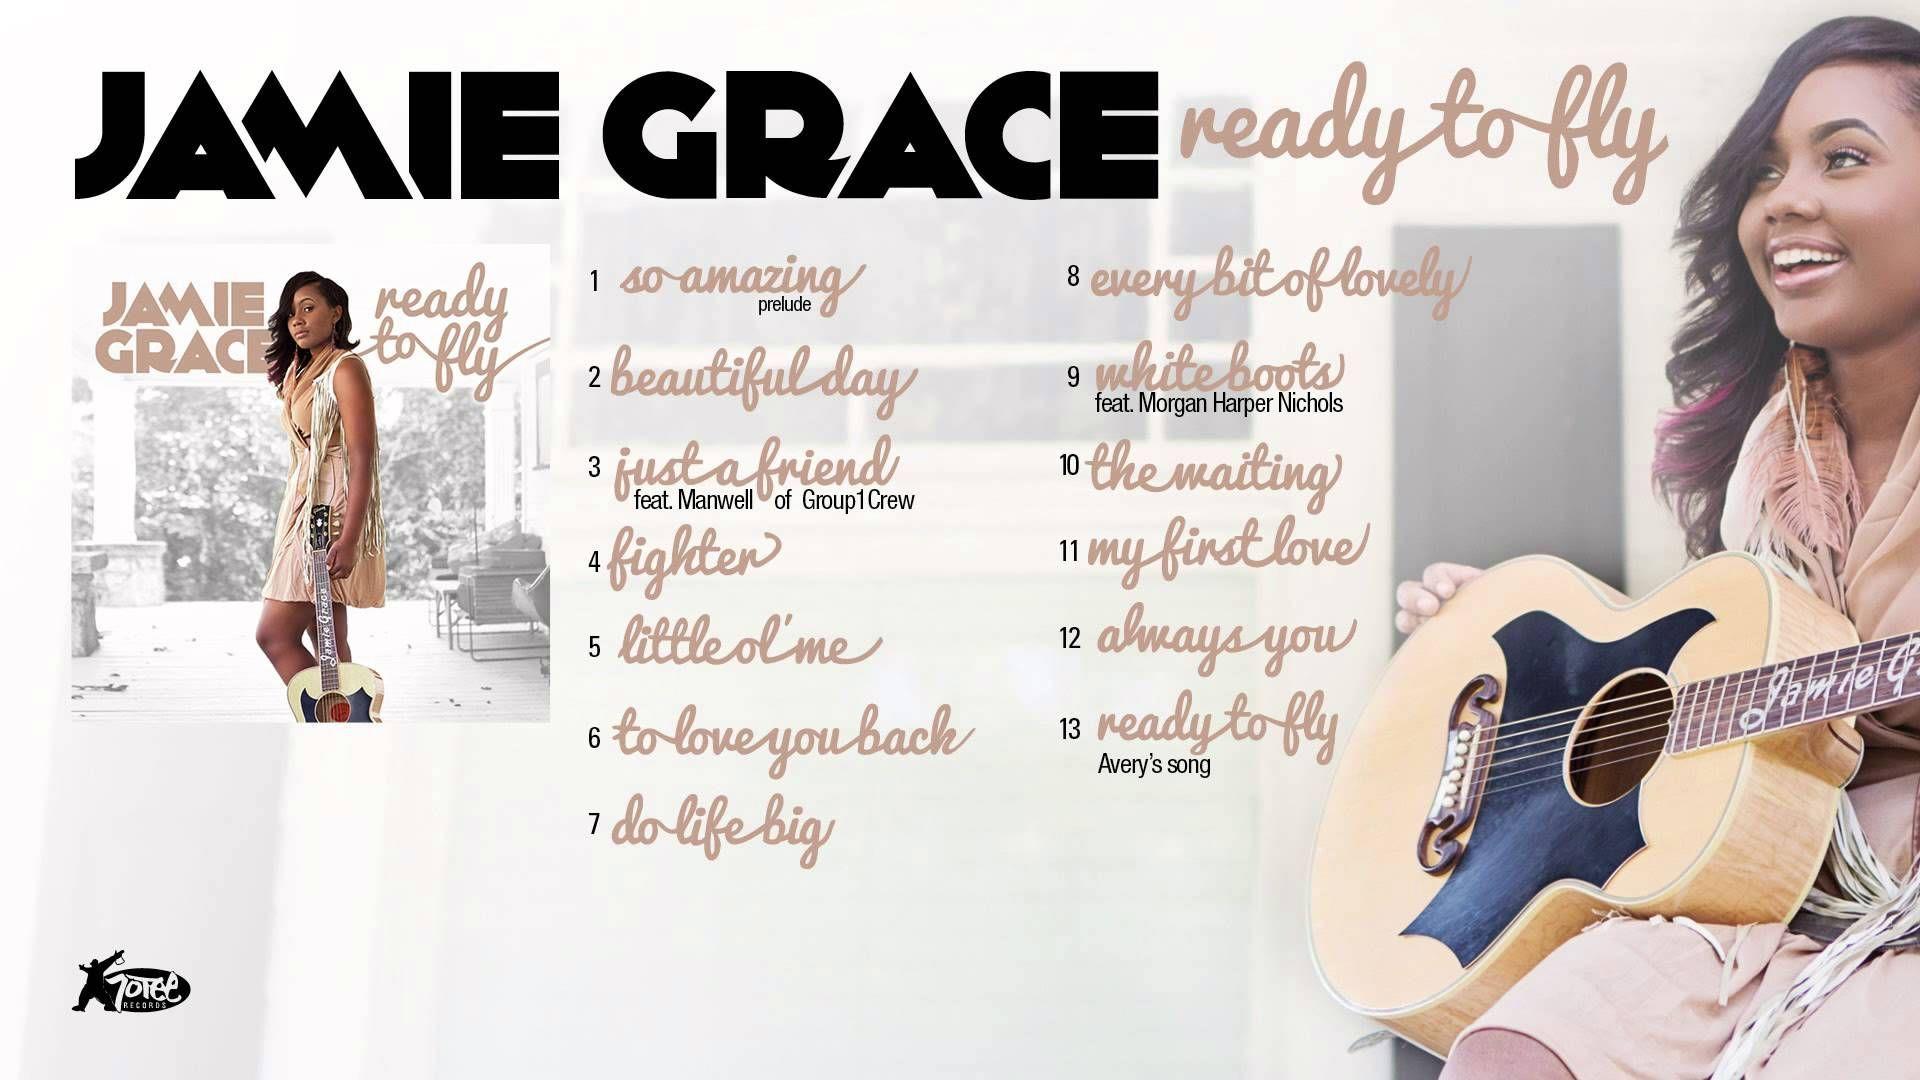 Jamie Grace To Fly (Full Album Audio). ♫ Jamie Grace